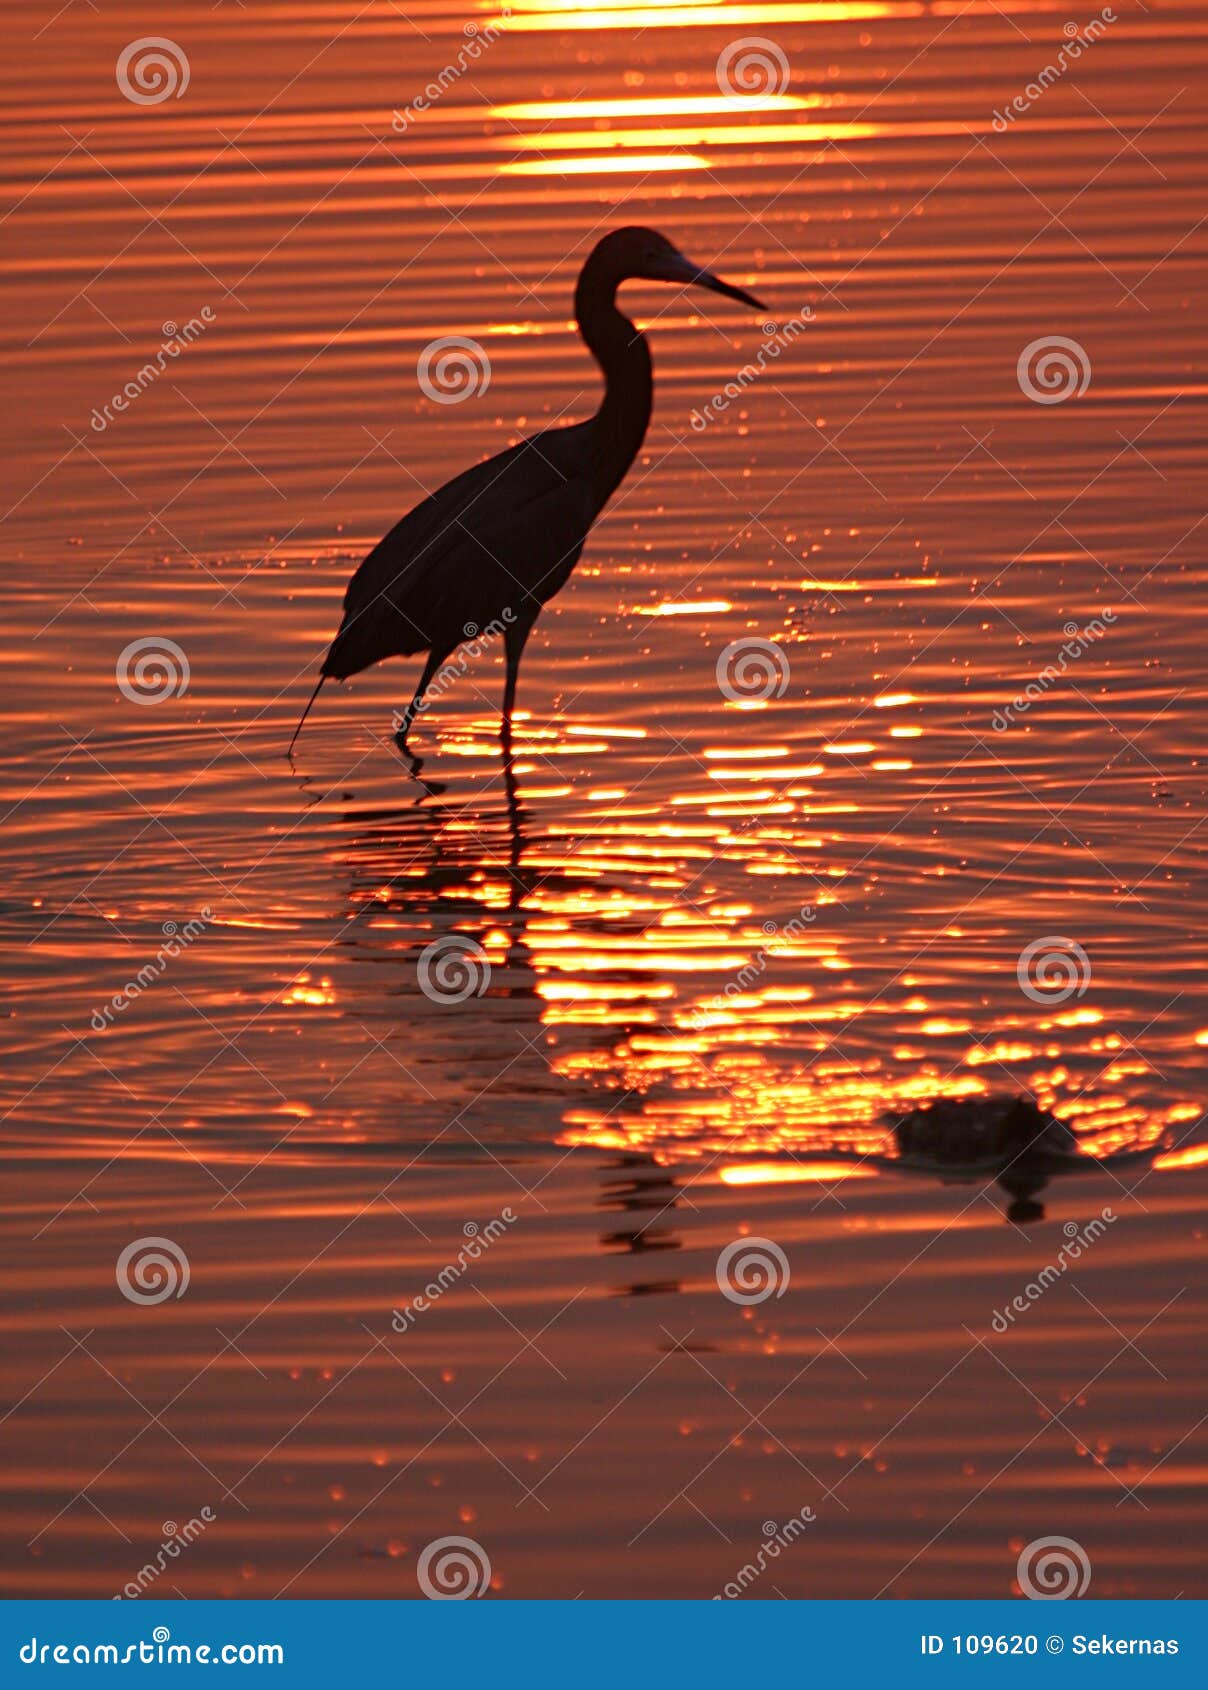 wading bird at sunset